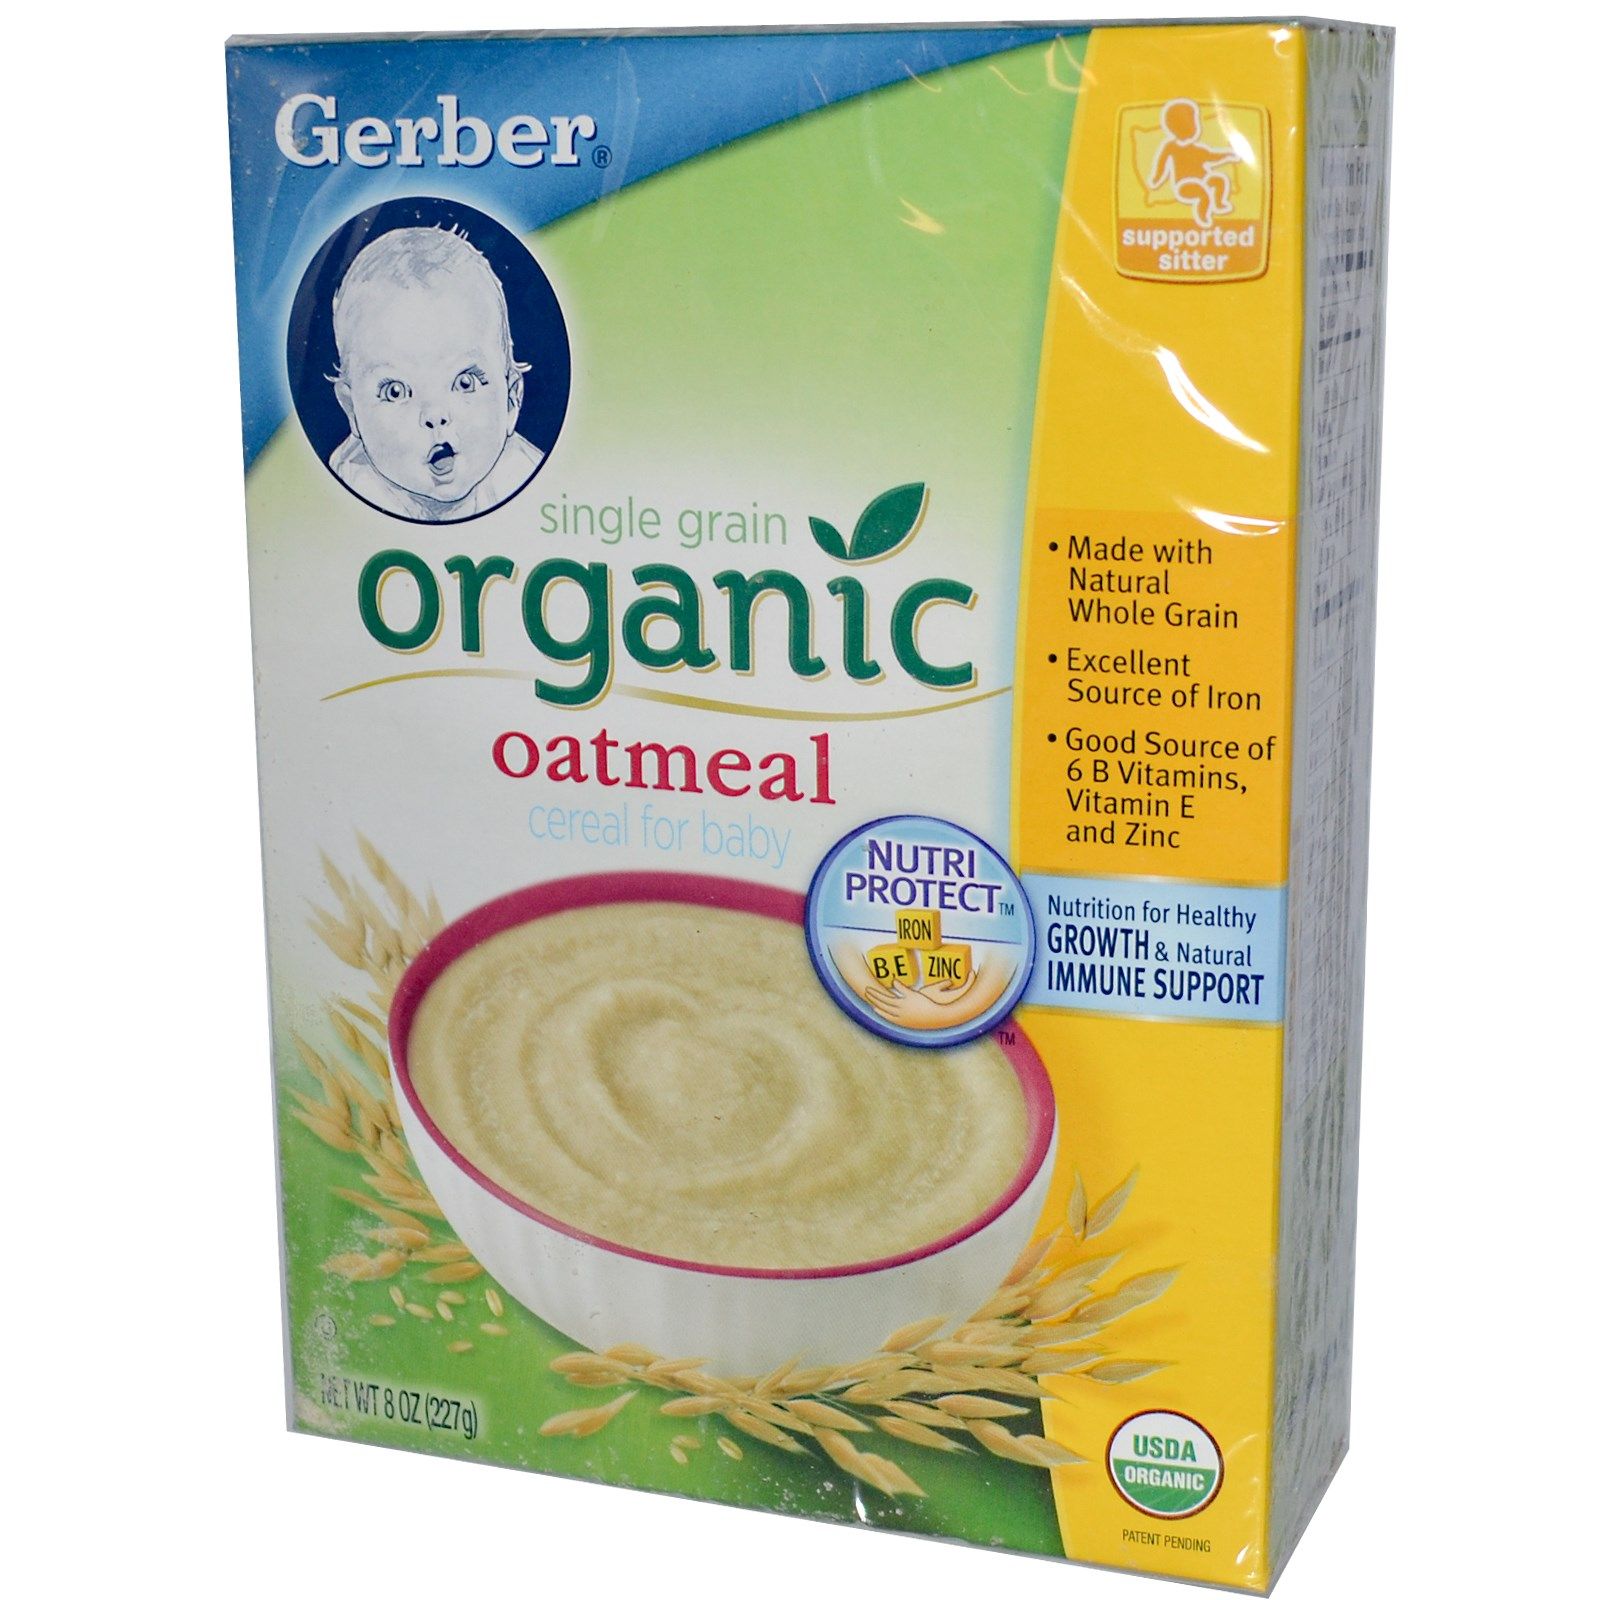 Gerber Baby Oatmeal Recipes